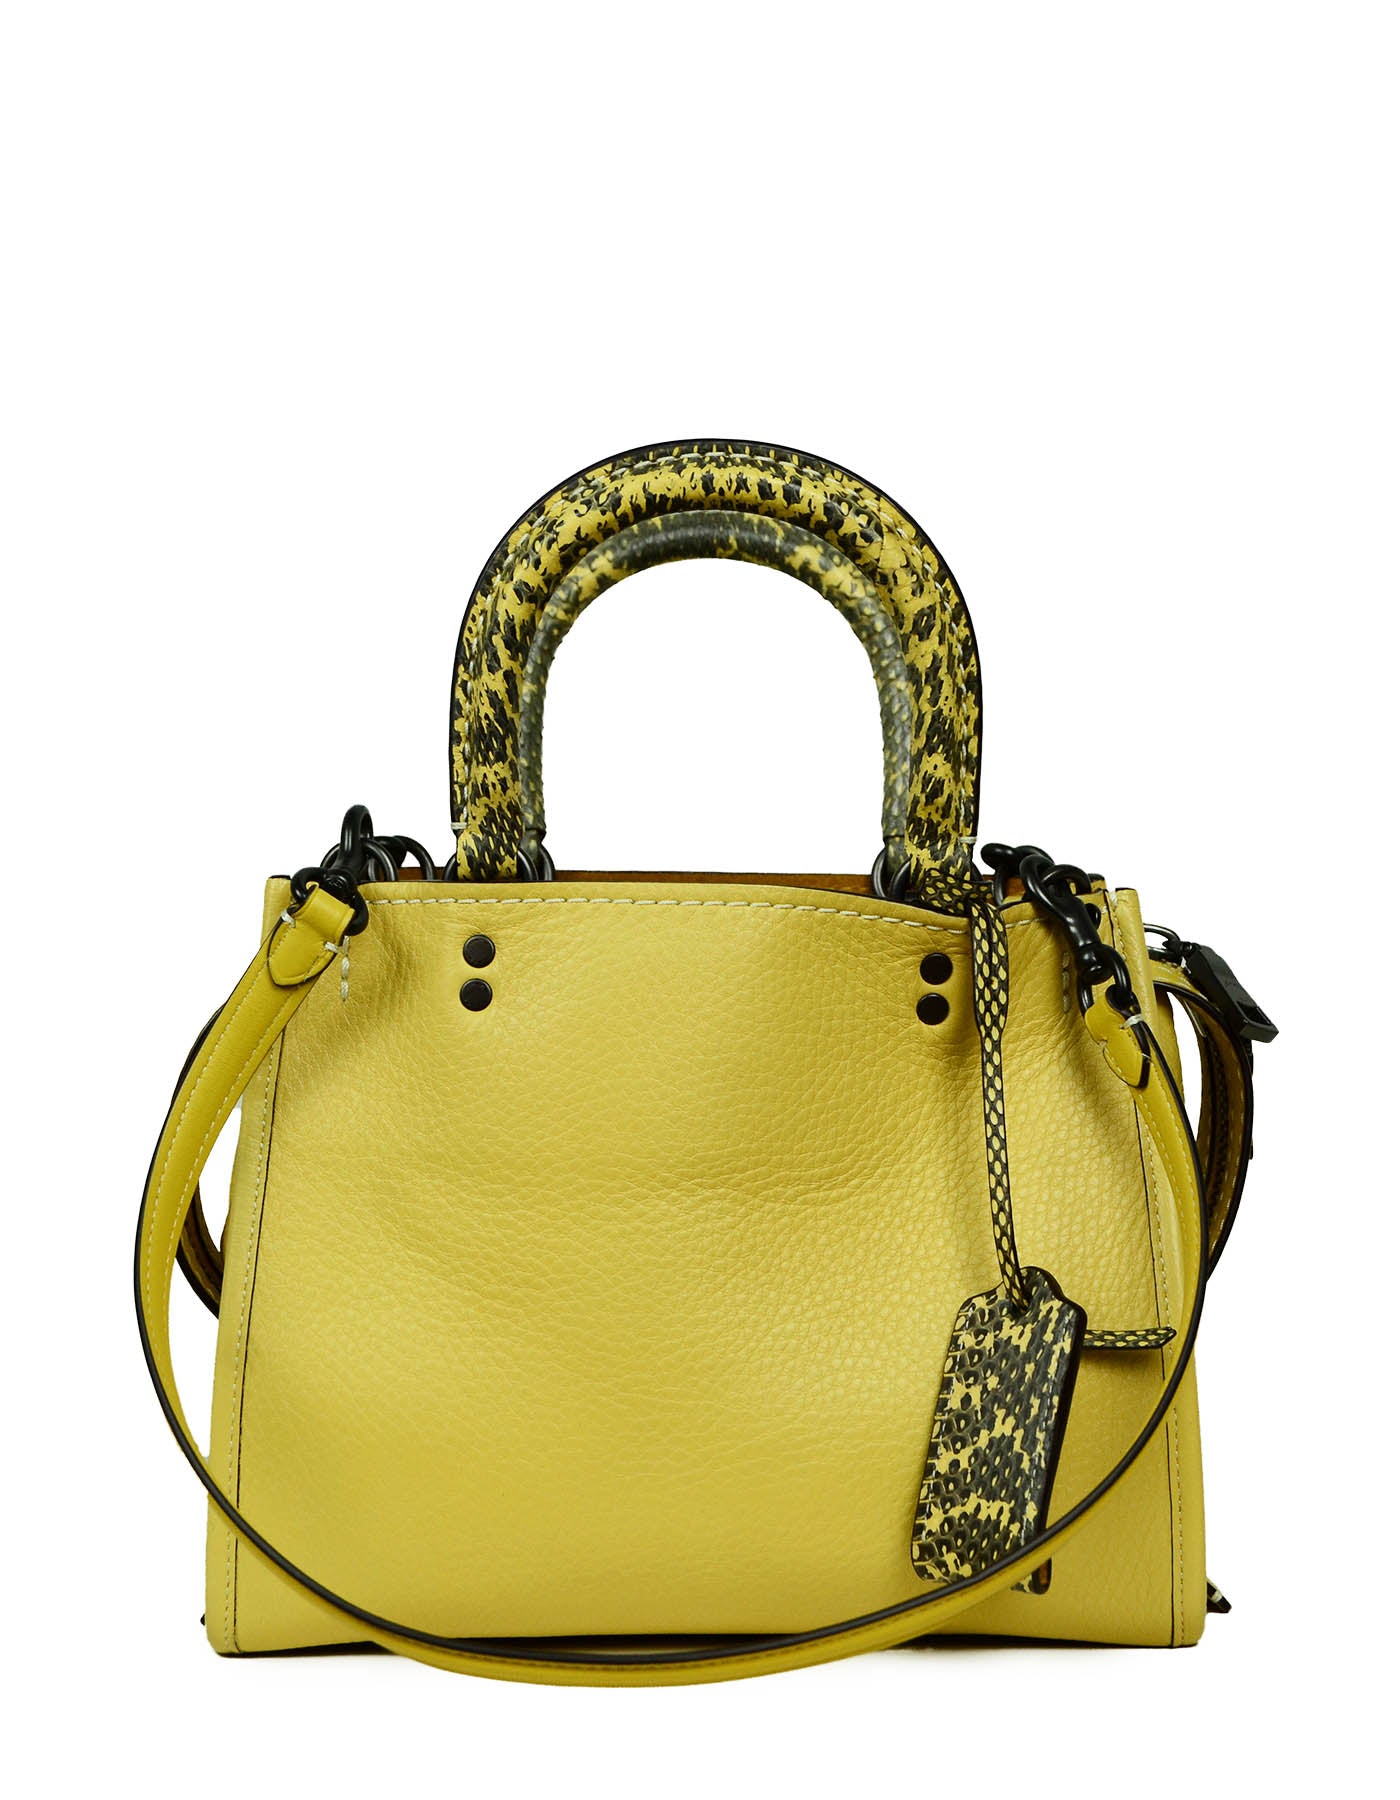 Coach Yellow Leather Rogue 25 Handbag w Snake Trim